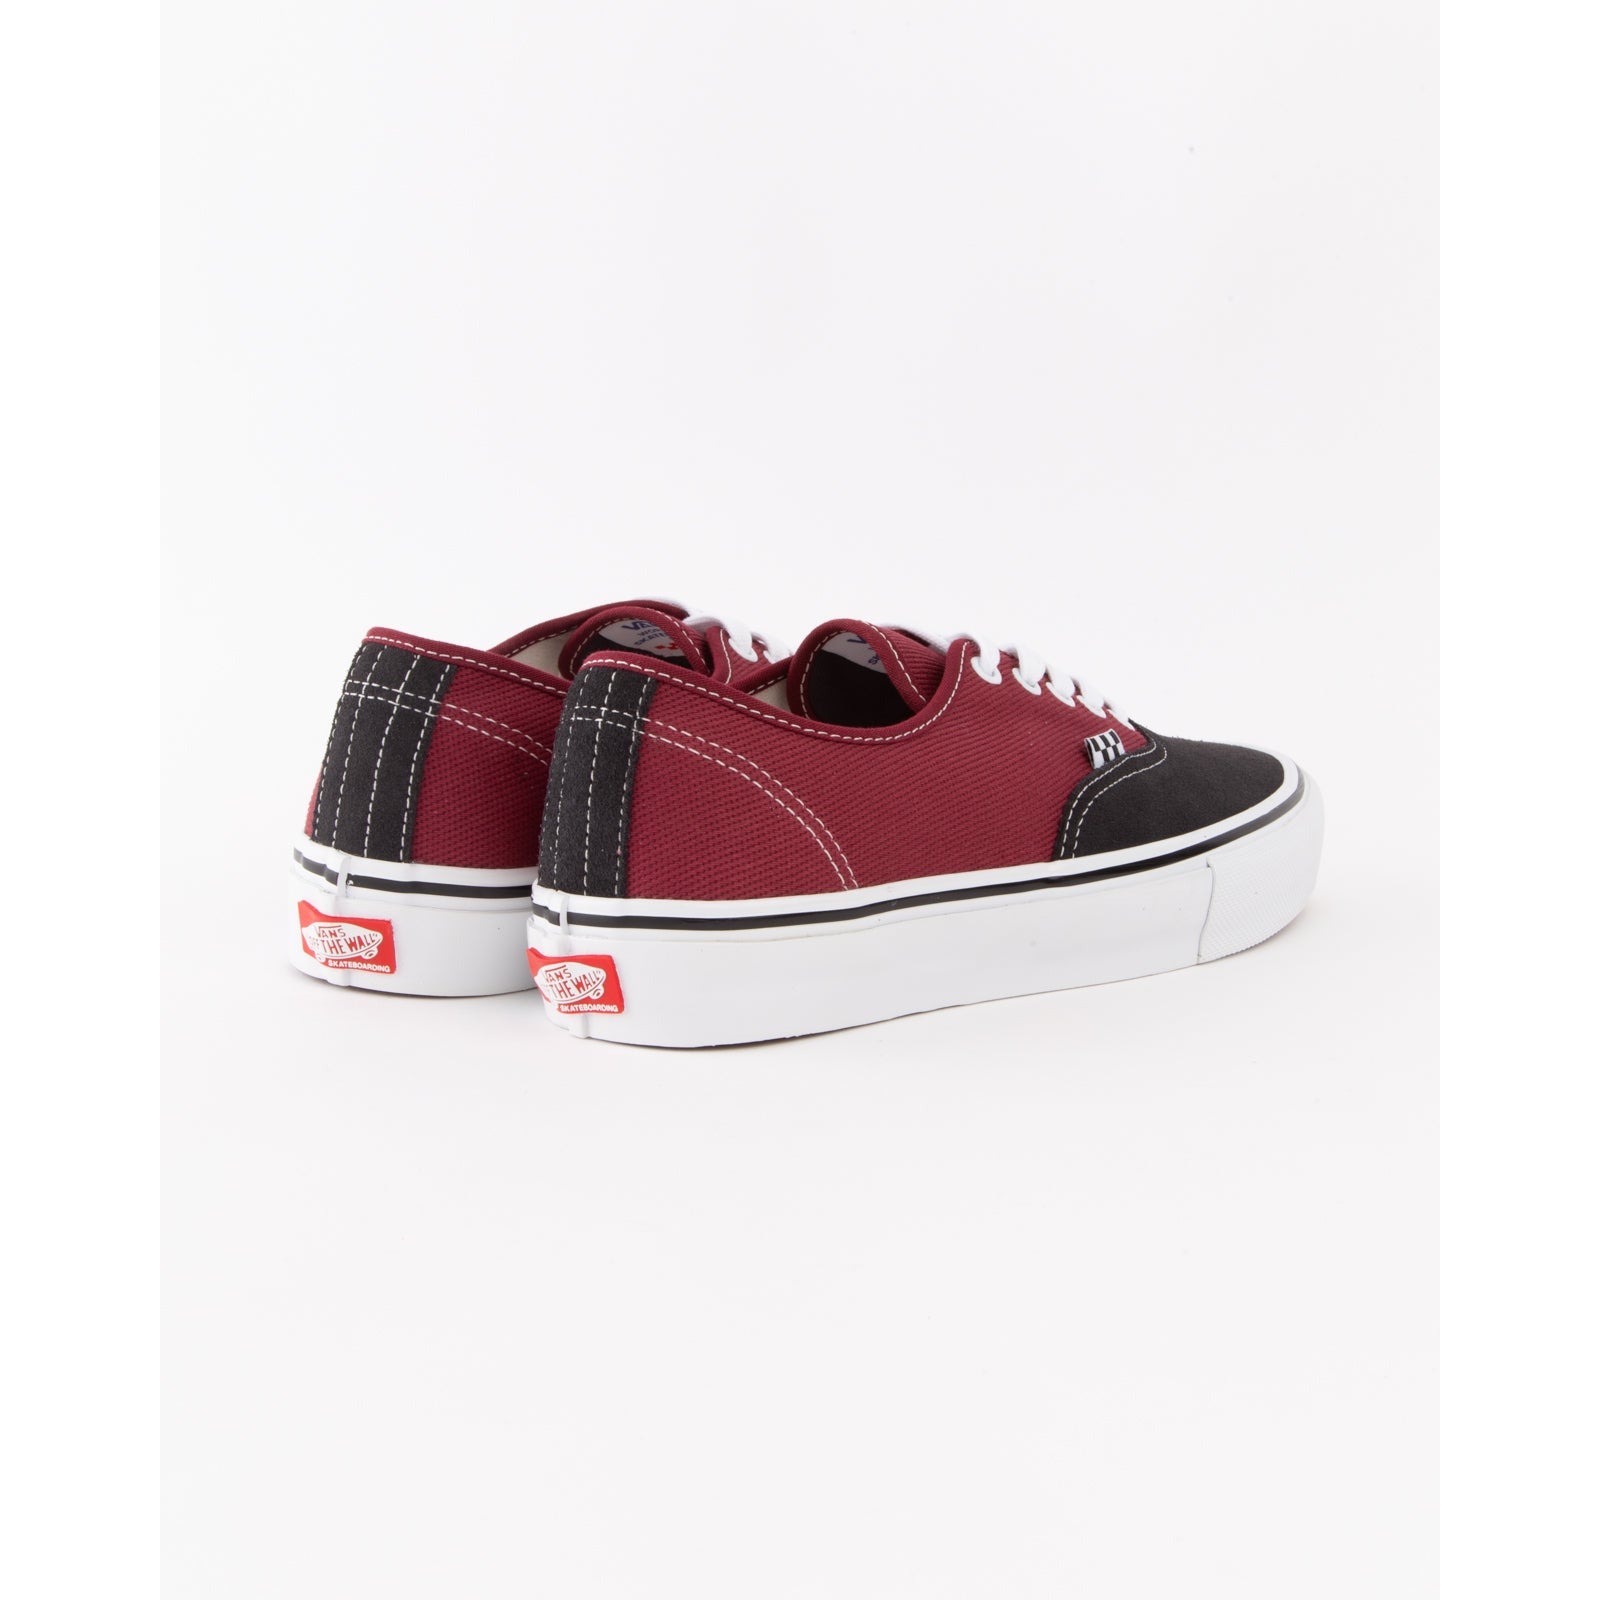 Vans Skate Authentic - Pomegranate - Skate Shoes